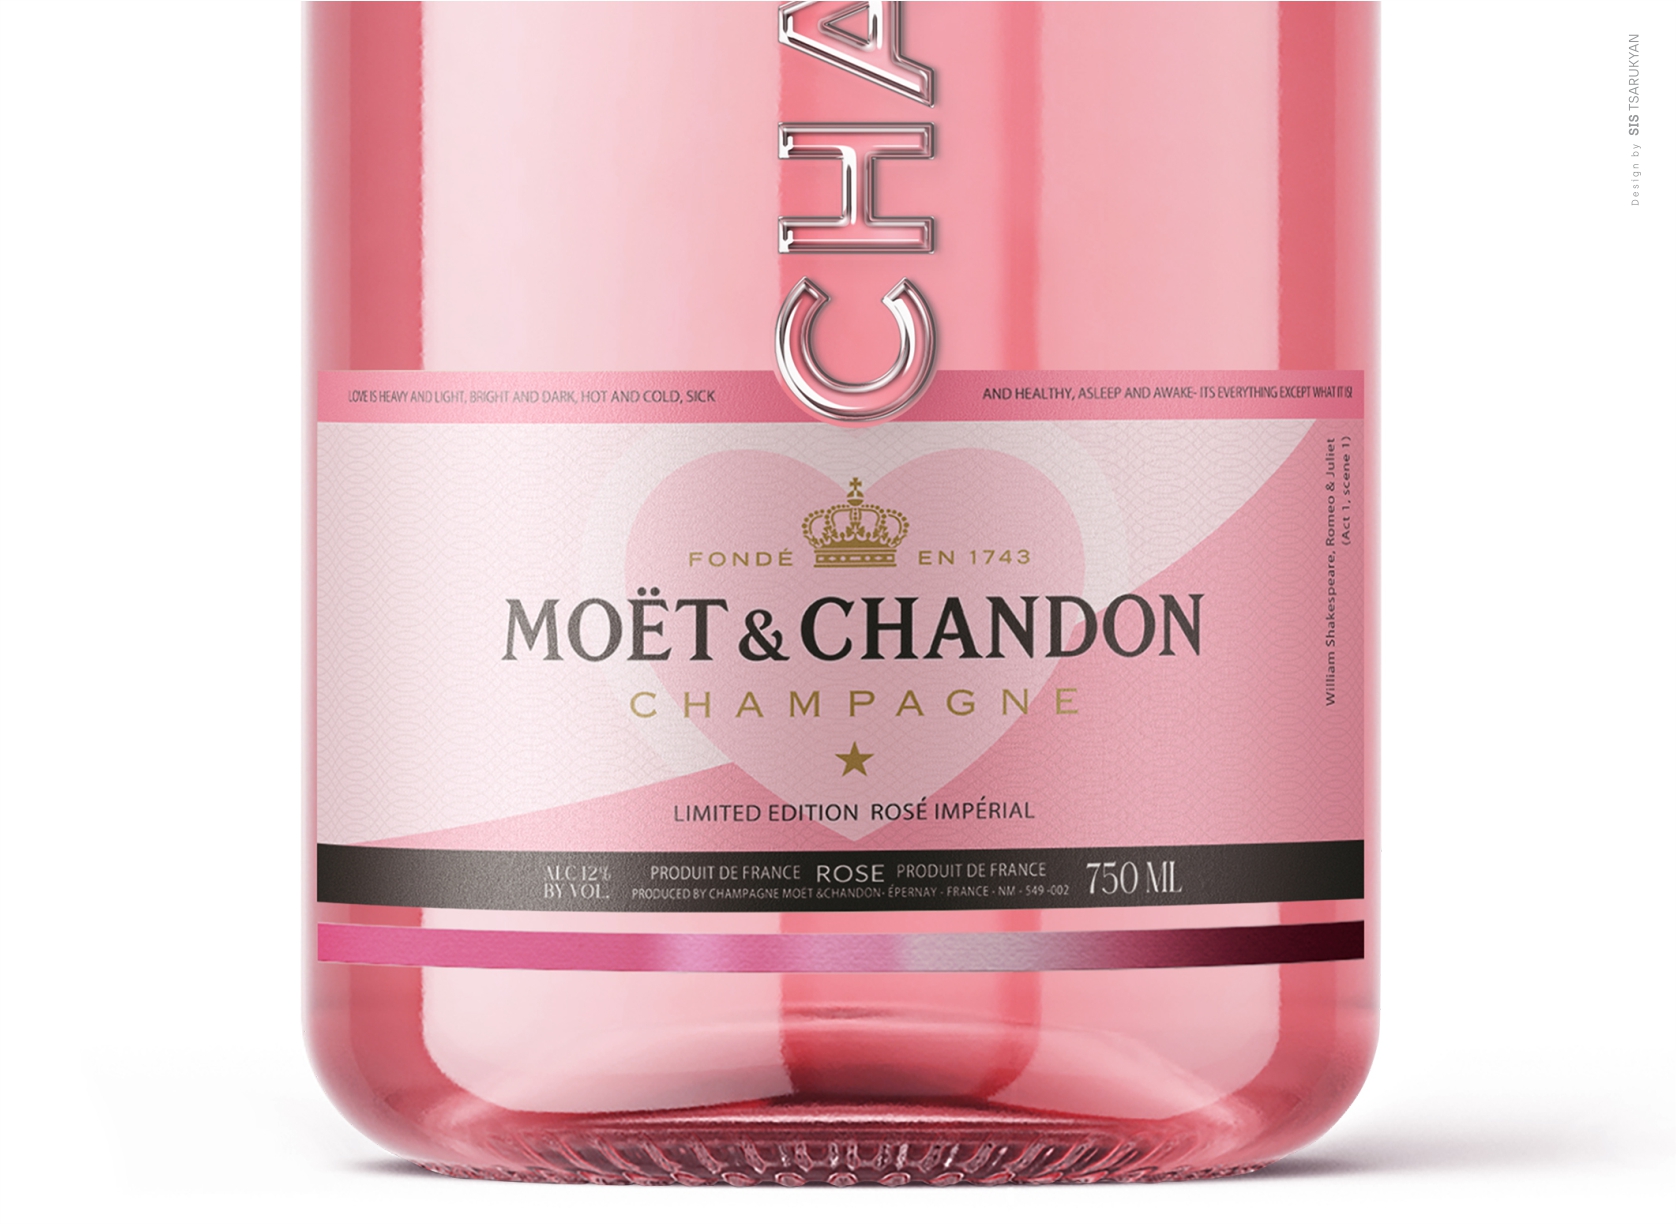 Moet & Chandon Rose Imperial Champagne Packaging Design